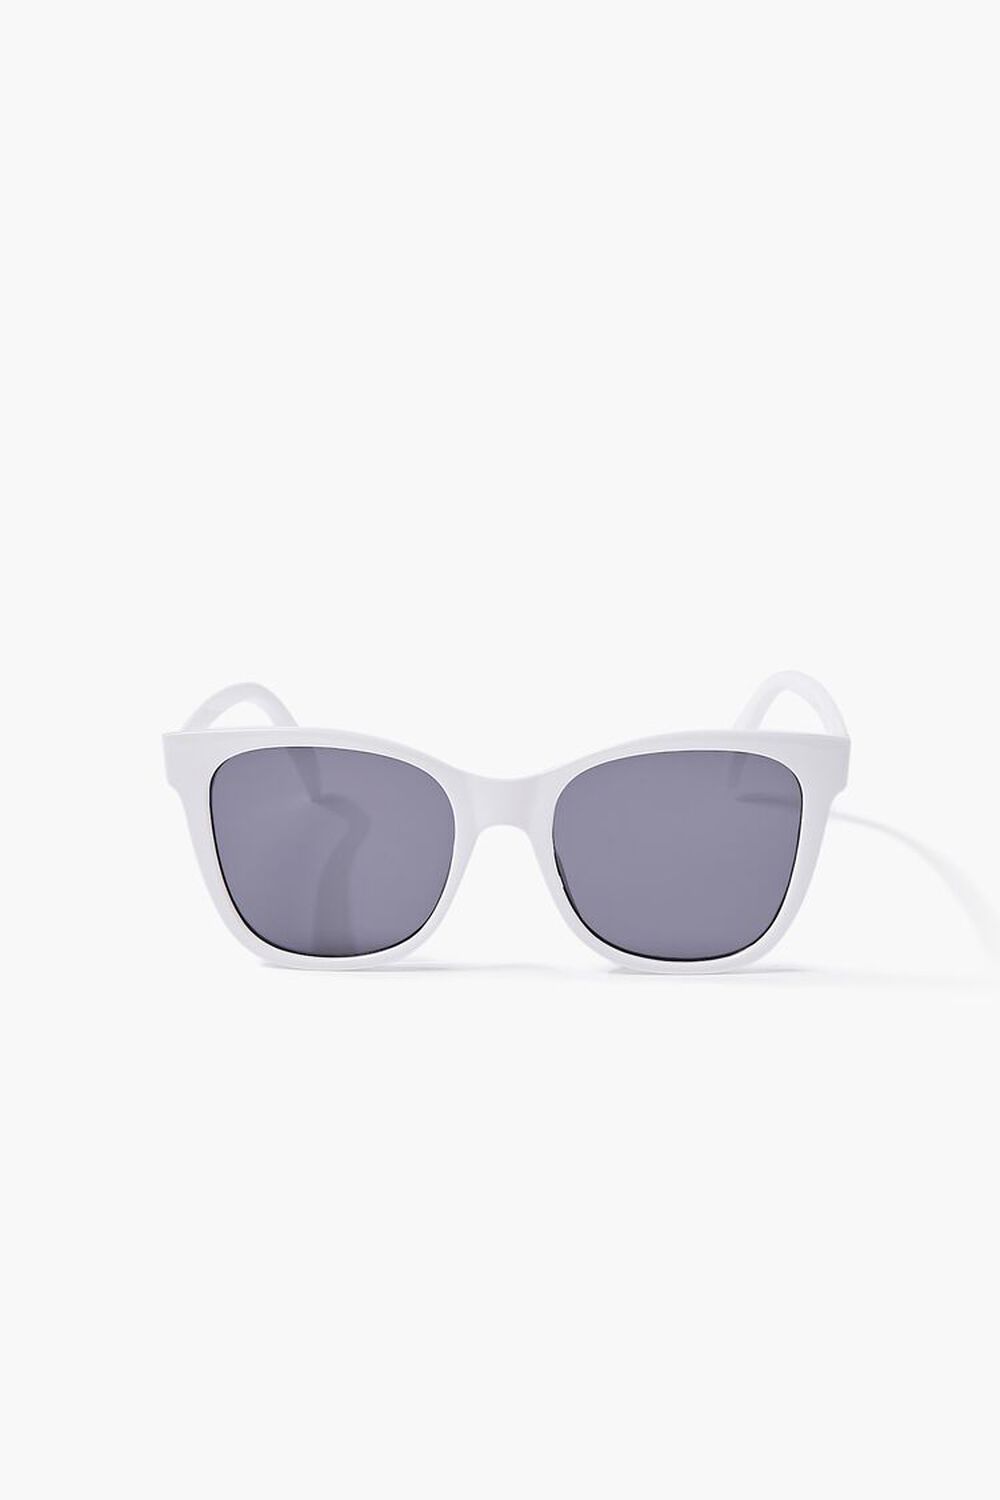 WHITE/BLACK Round Tinted Sunglasses, image 1